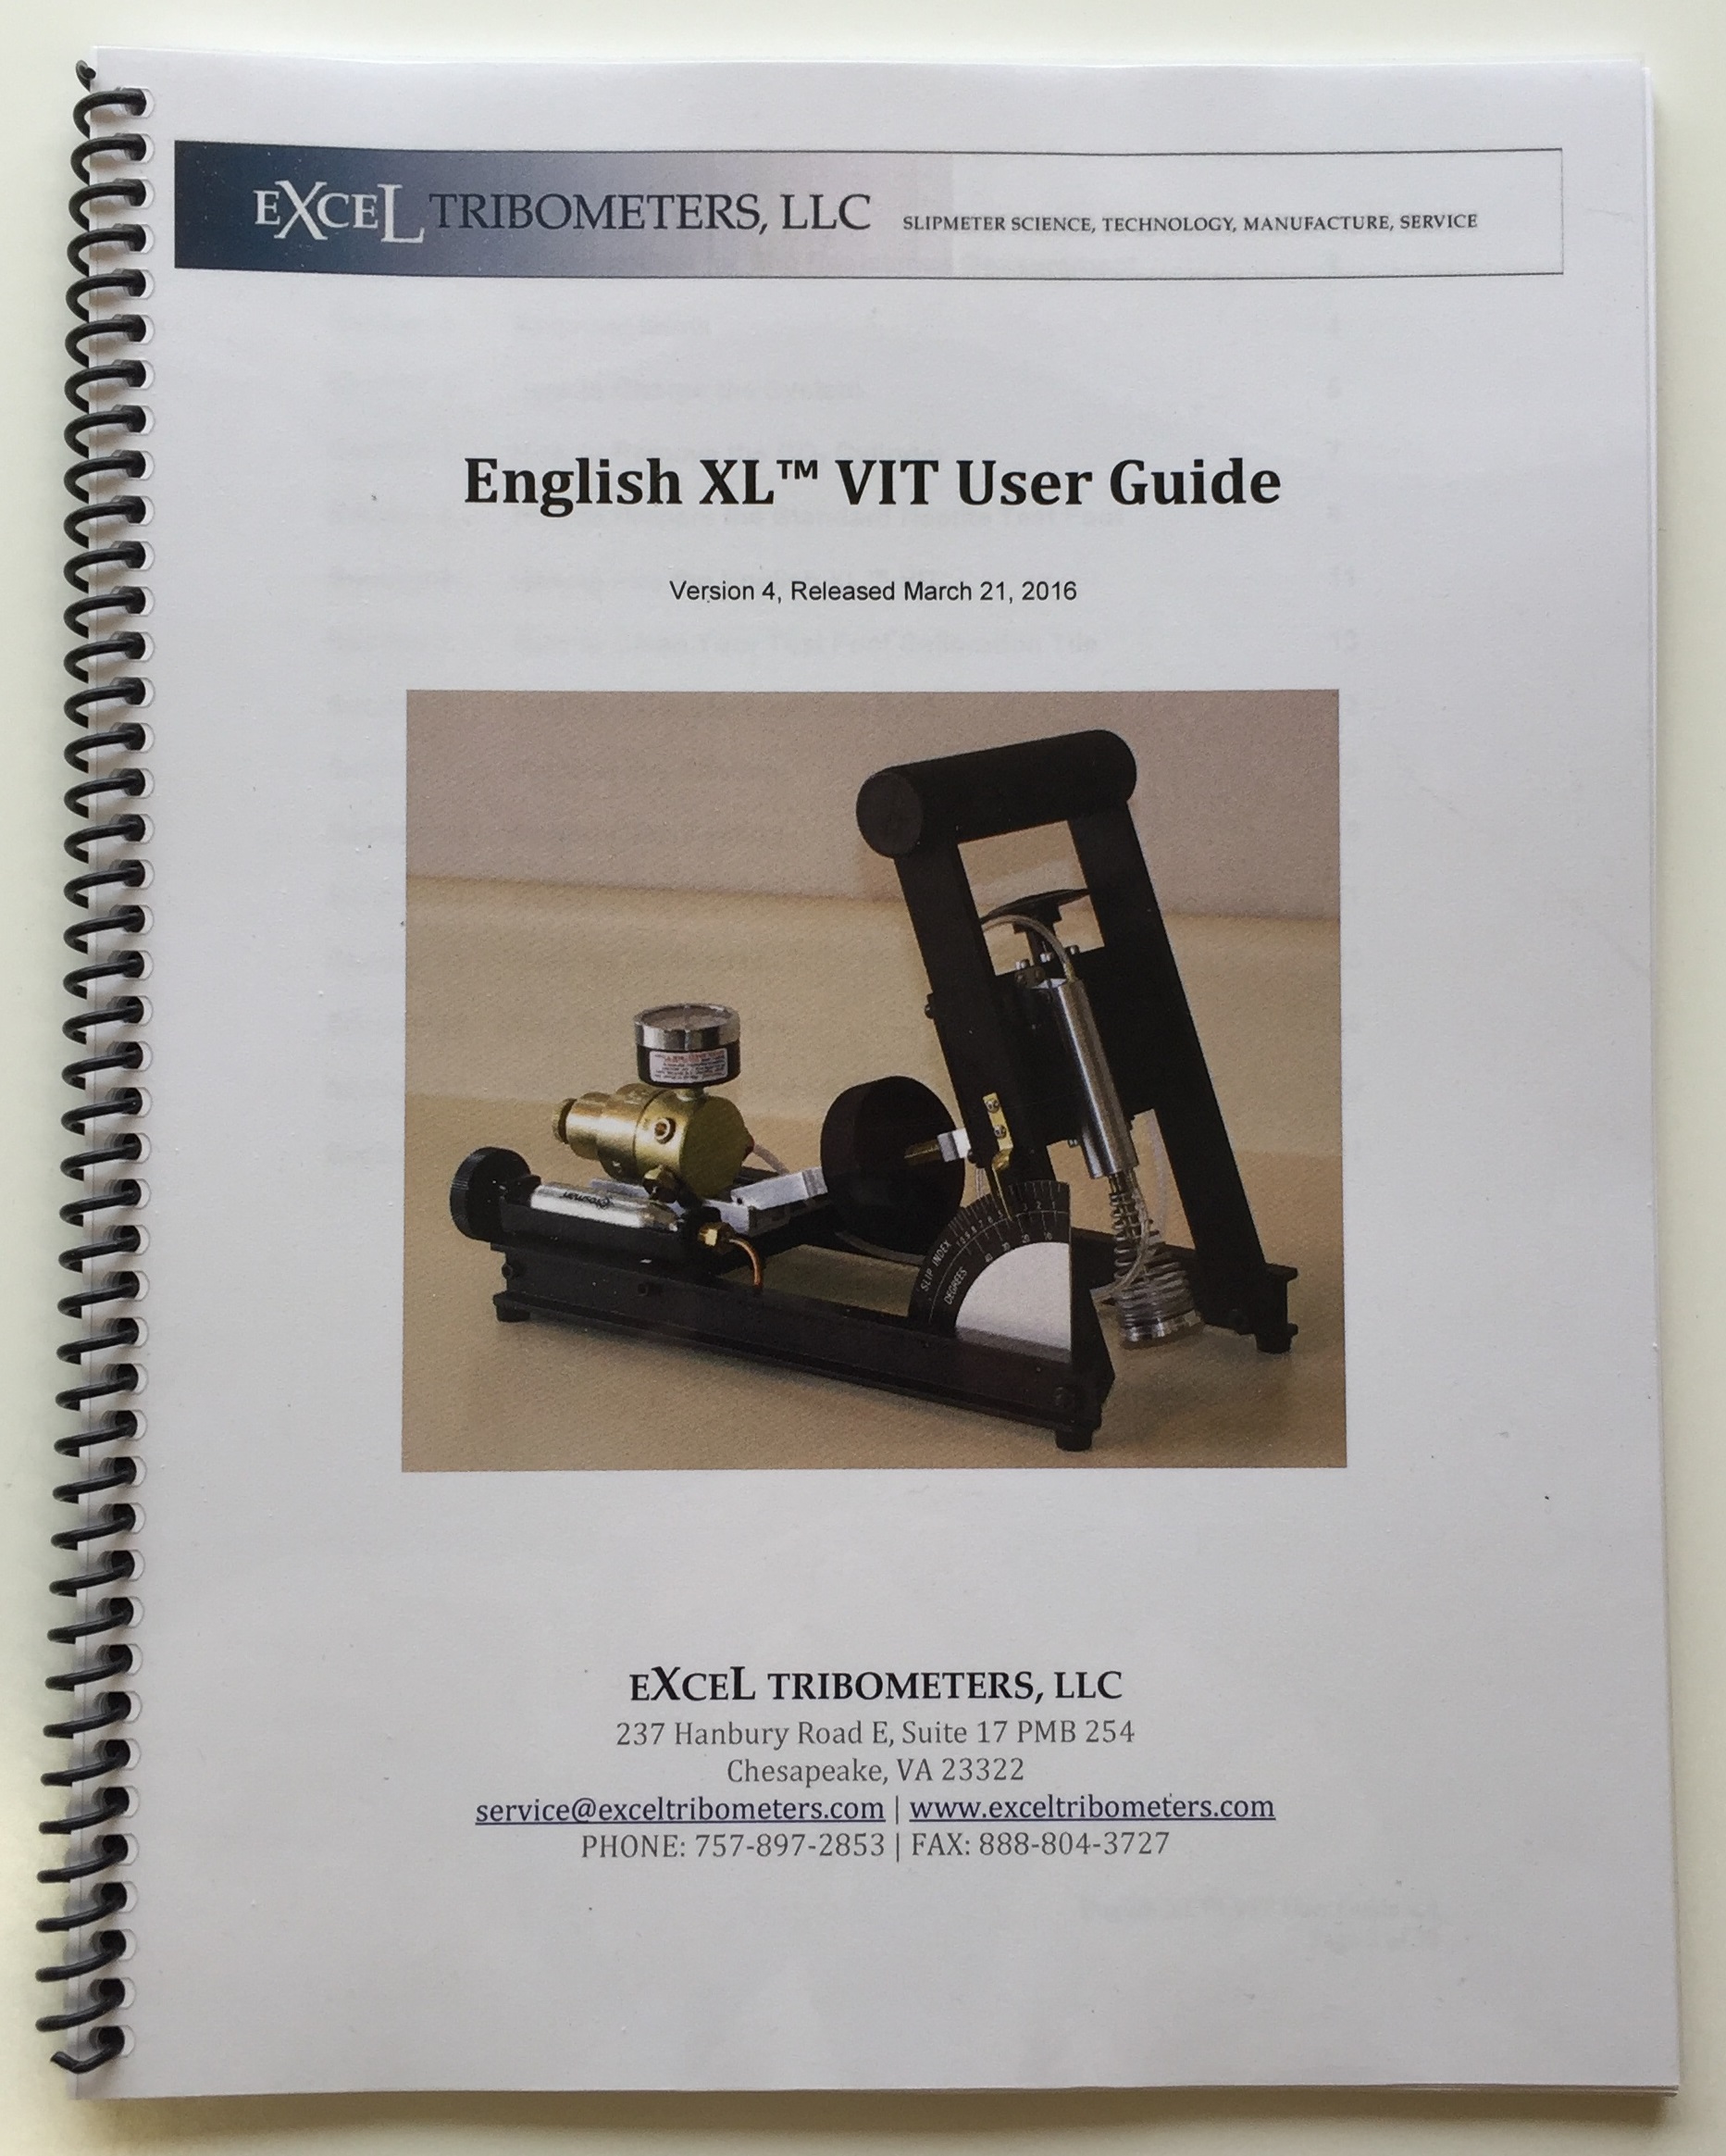 English XL VIT User Guide